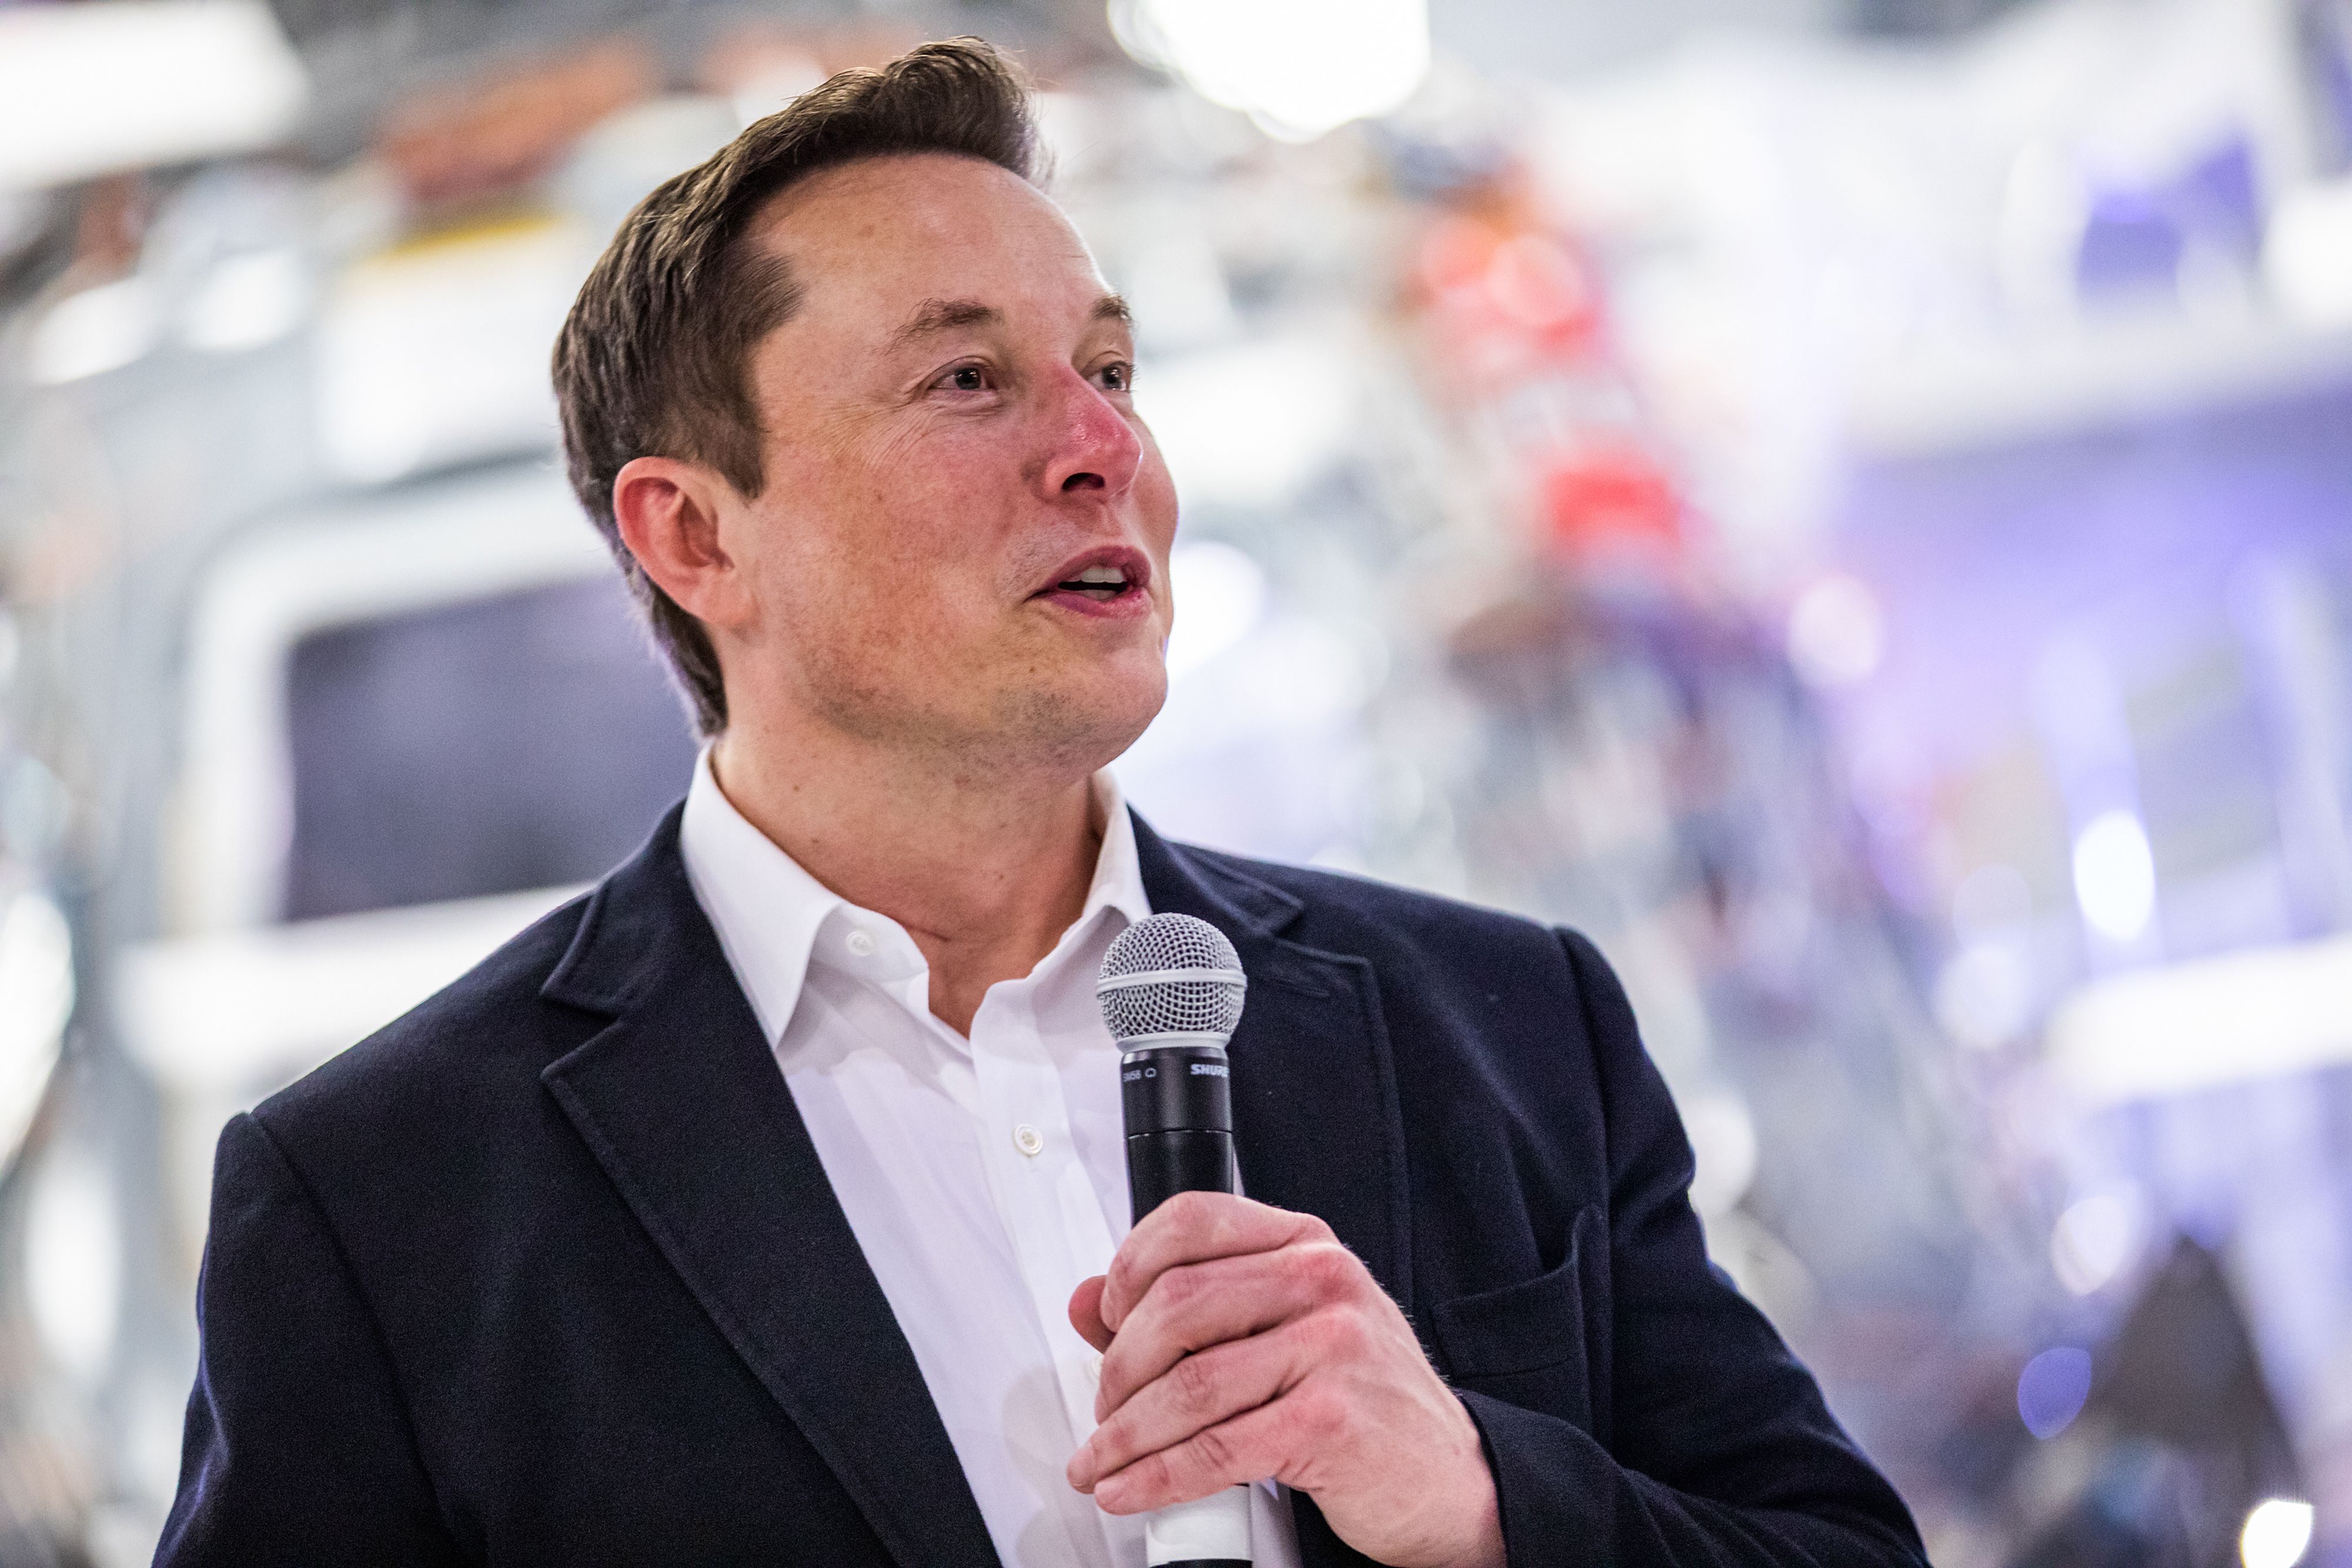 Elon Musk Drags Tesla Stock Price Down with Tweet